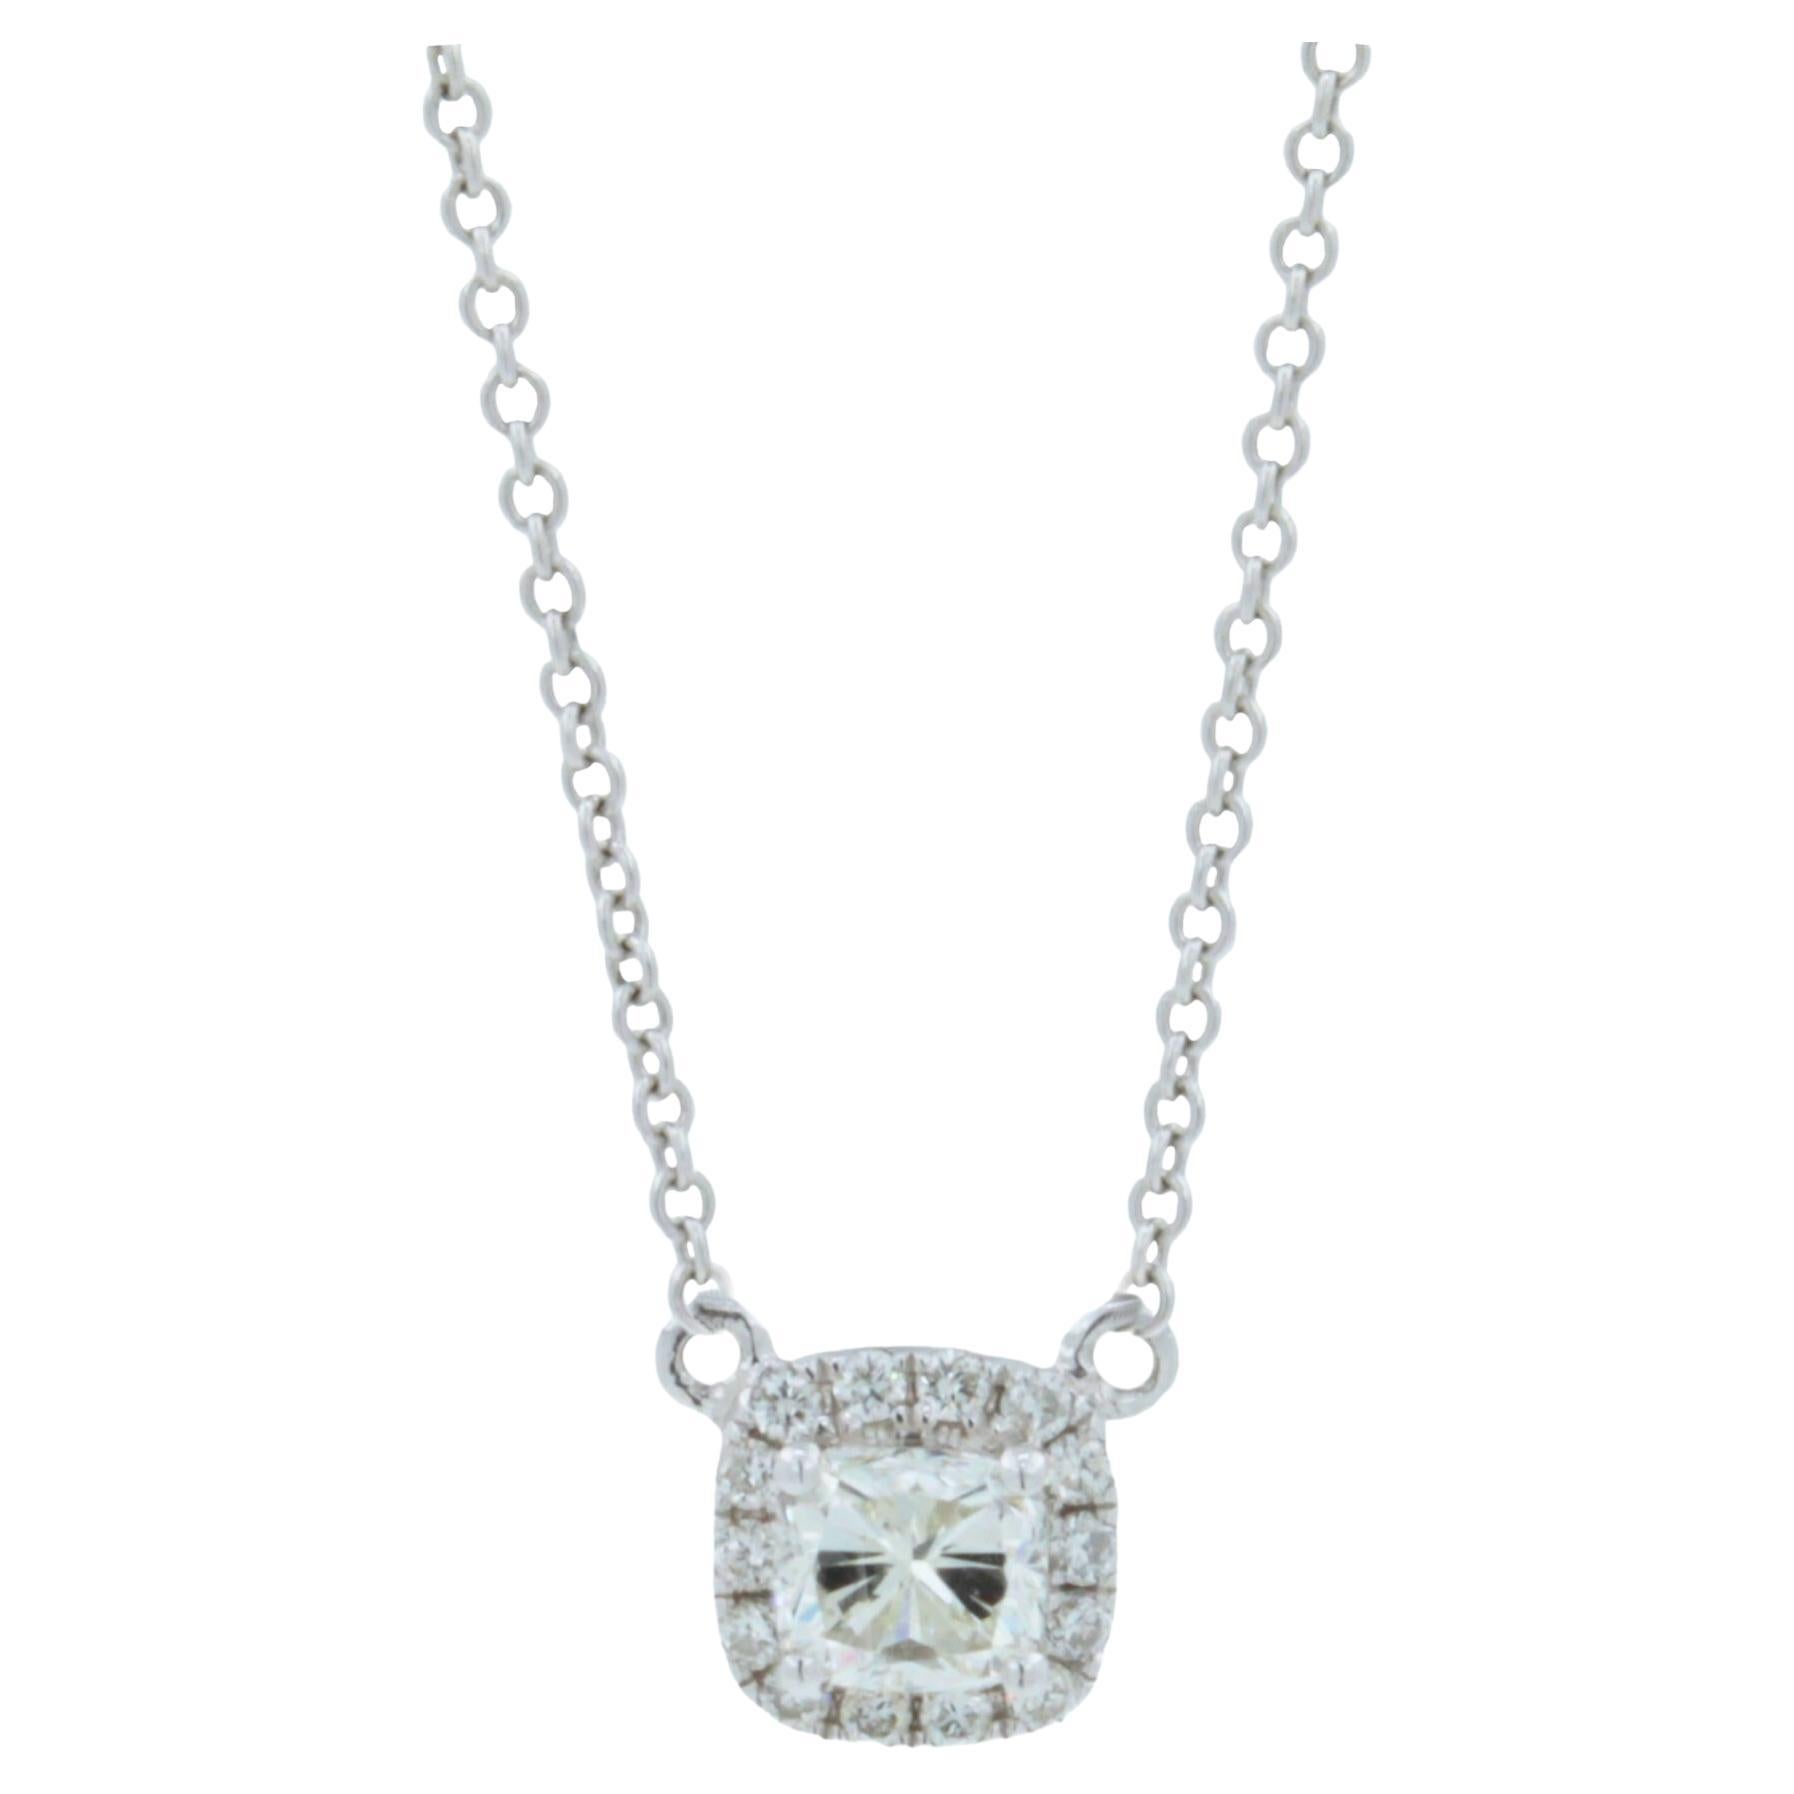 Halo Pave Cushion Cut Diamond Pendant 18 Karat White Gold Necklace Chain Charm For Sale